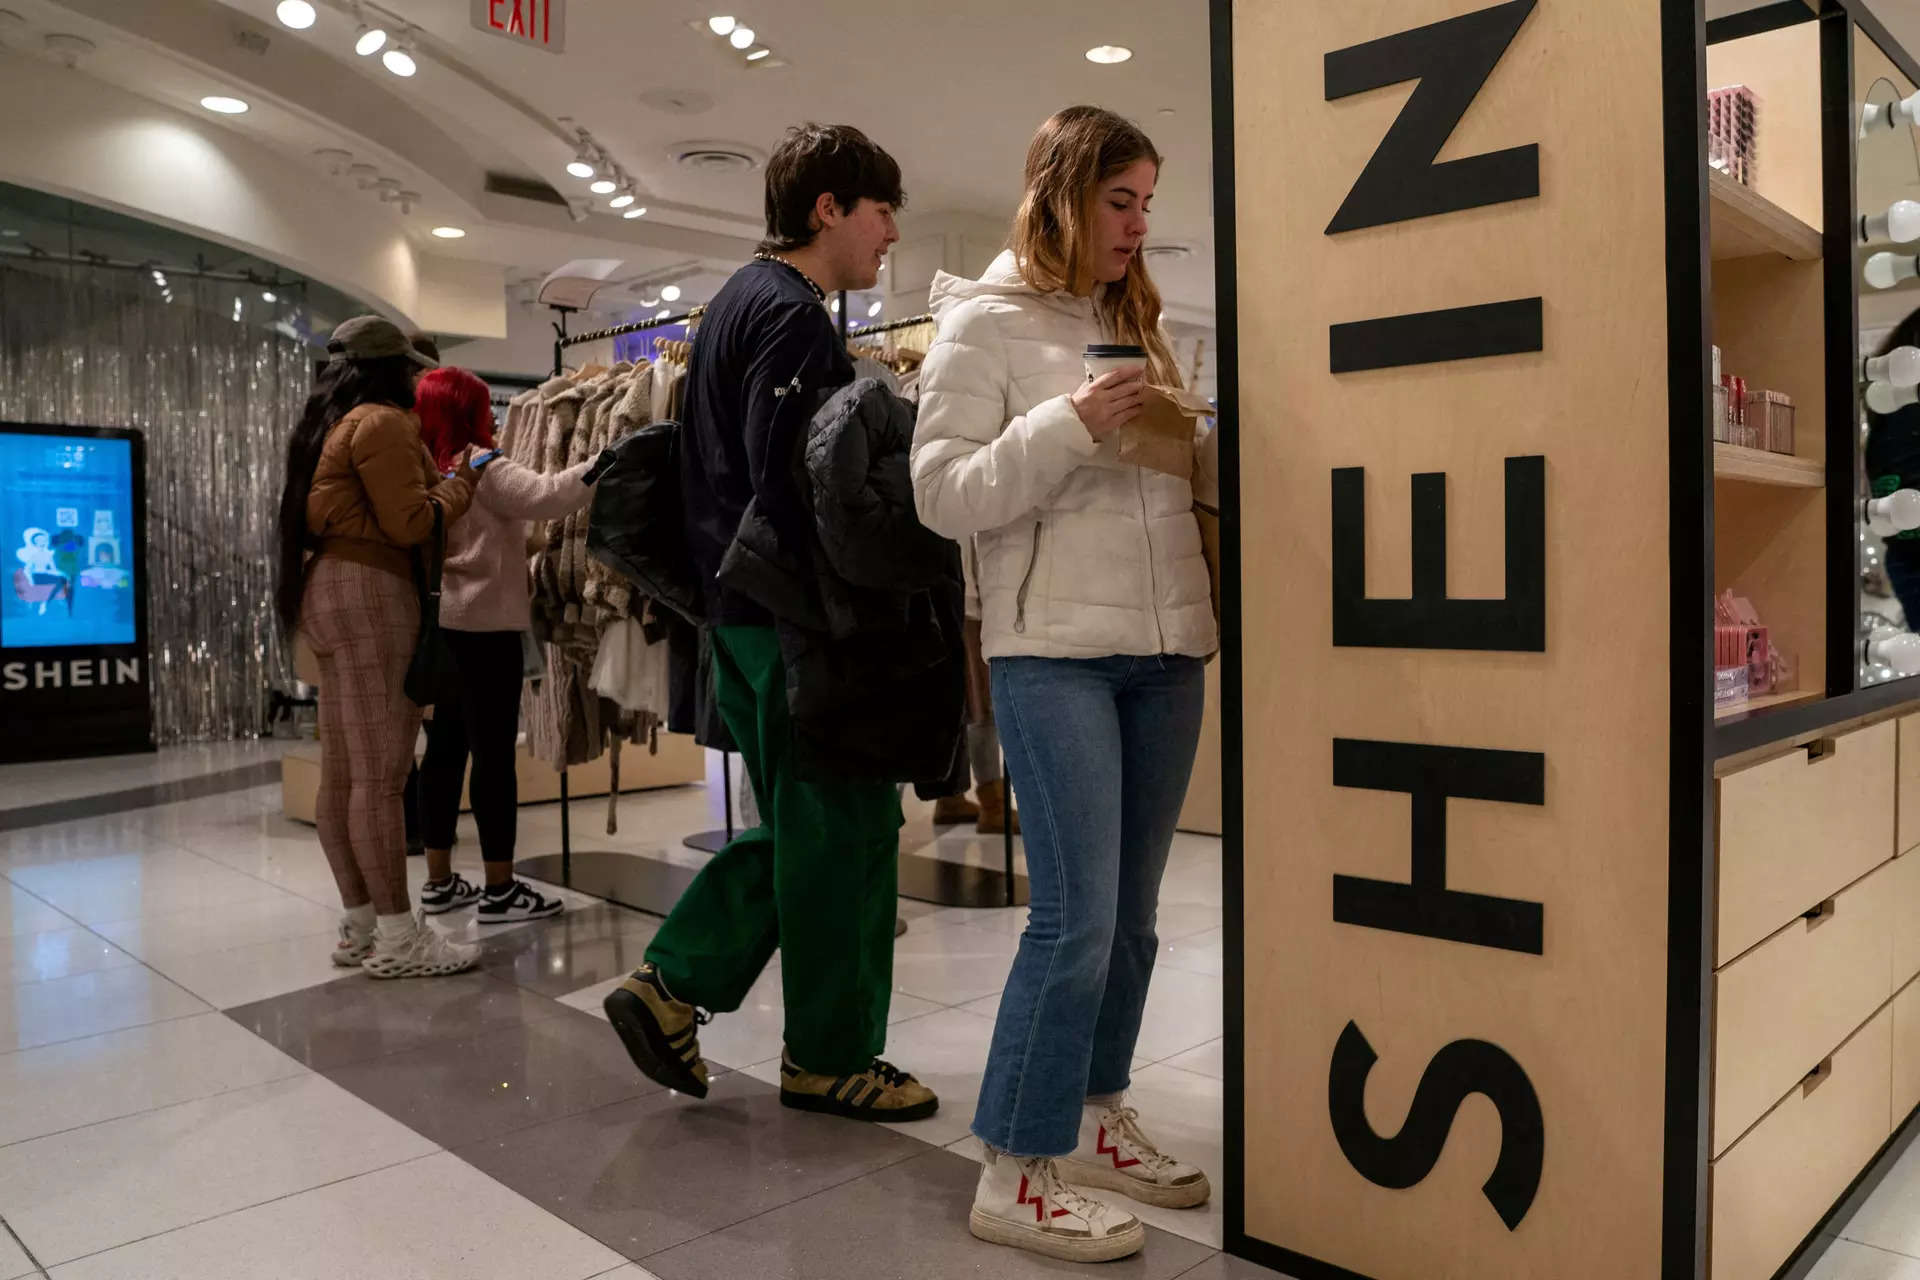 Shein Fast-fashion Giant: How China's Shein became a fast-fashion